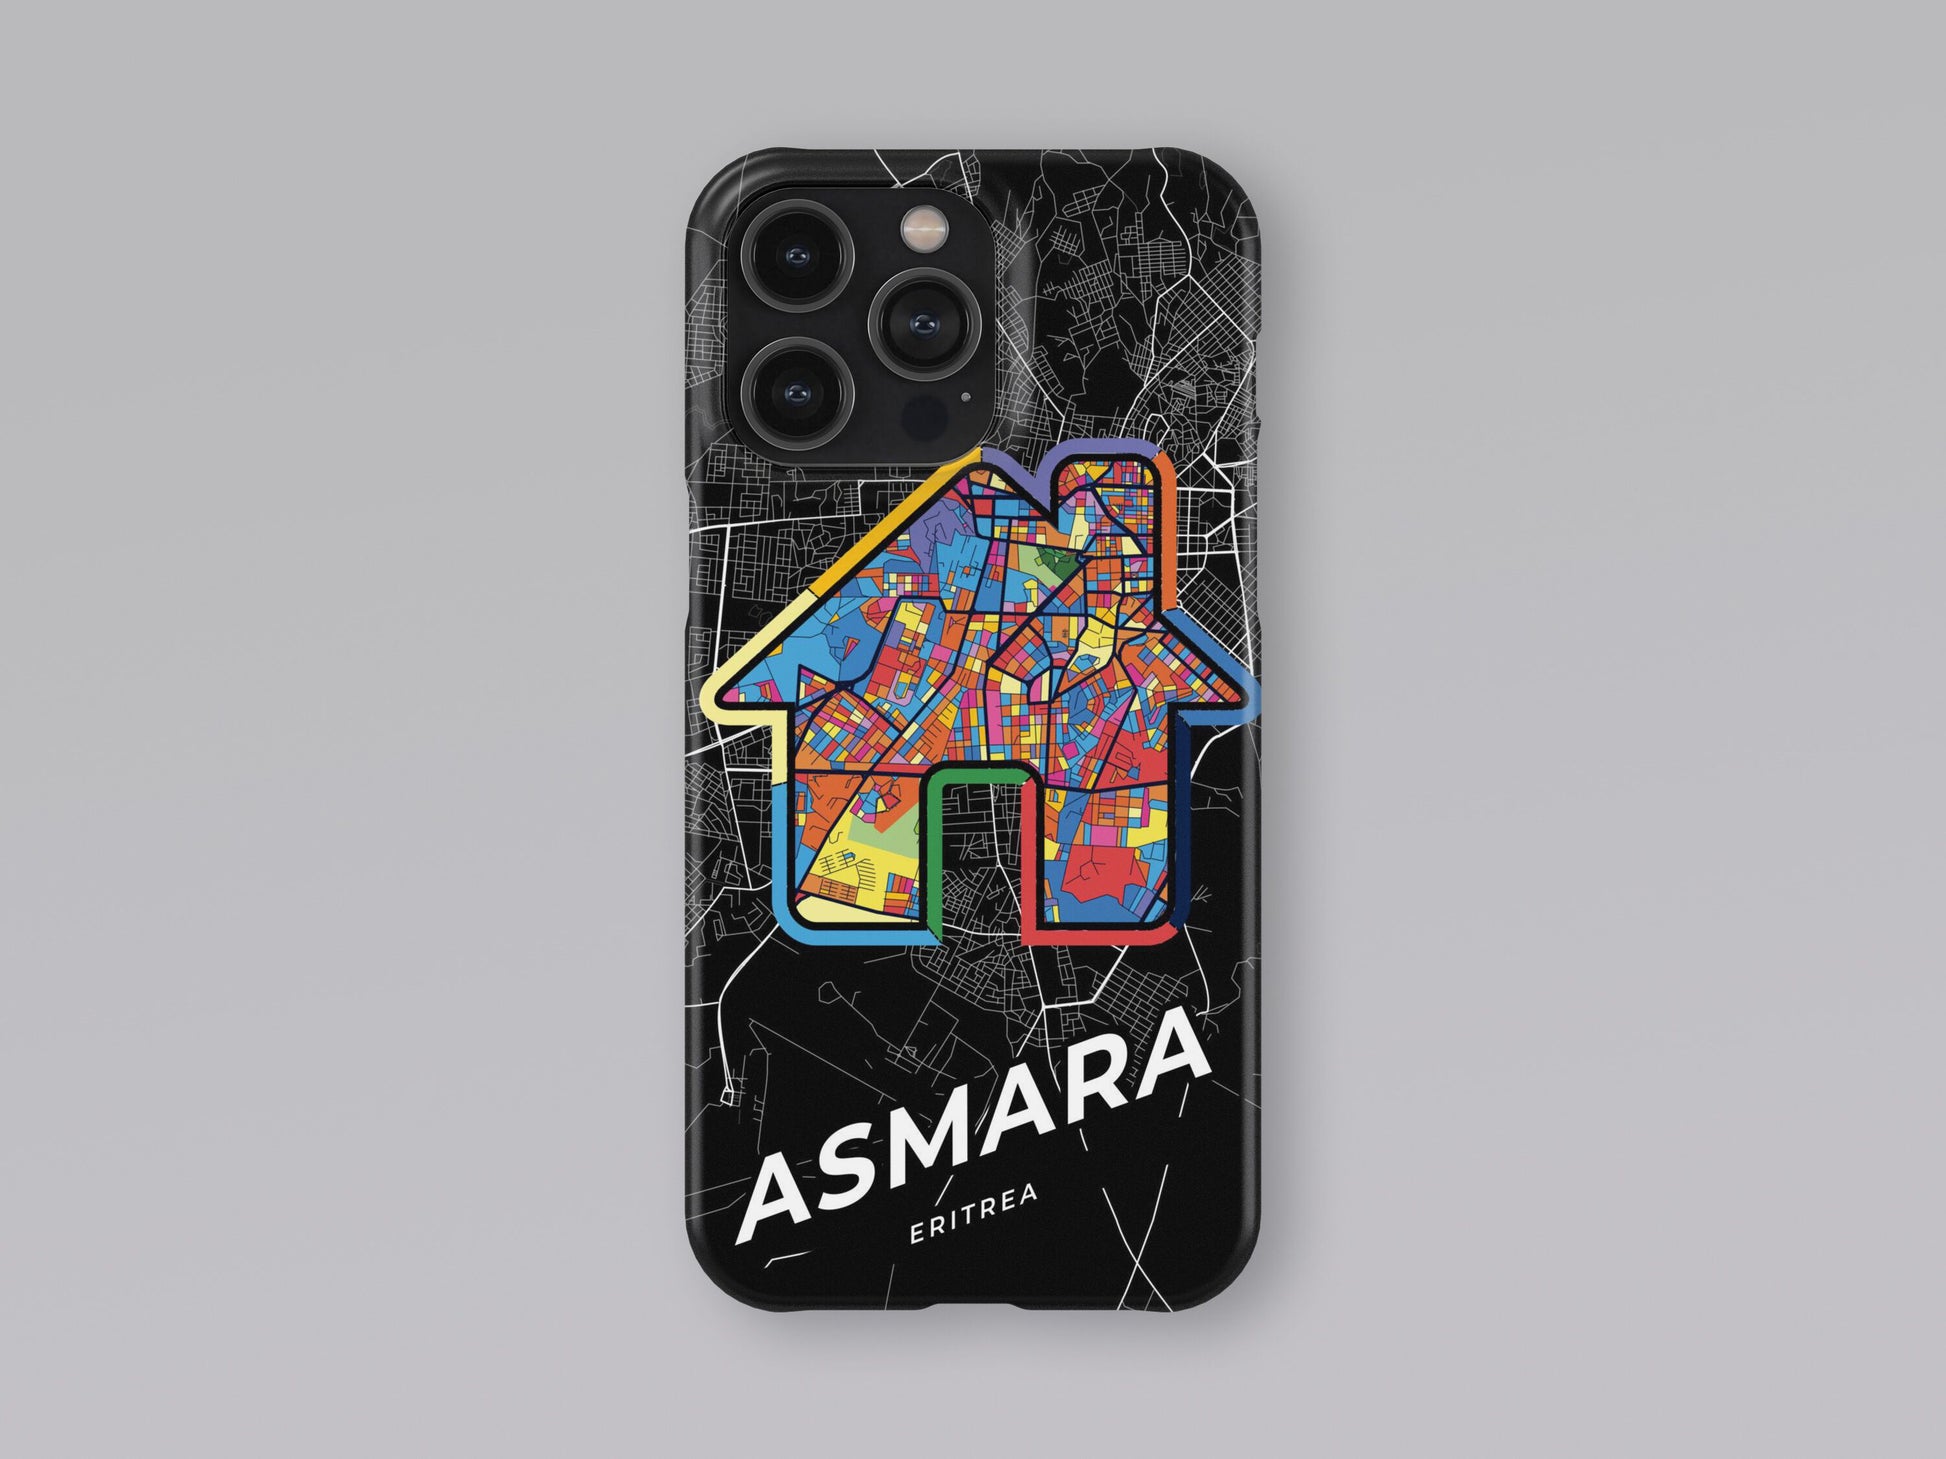 Asmara Eritrea slim phone case with colorful icon. Birthday, wedding or housewarming gift. Couple match cases. 3